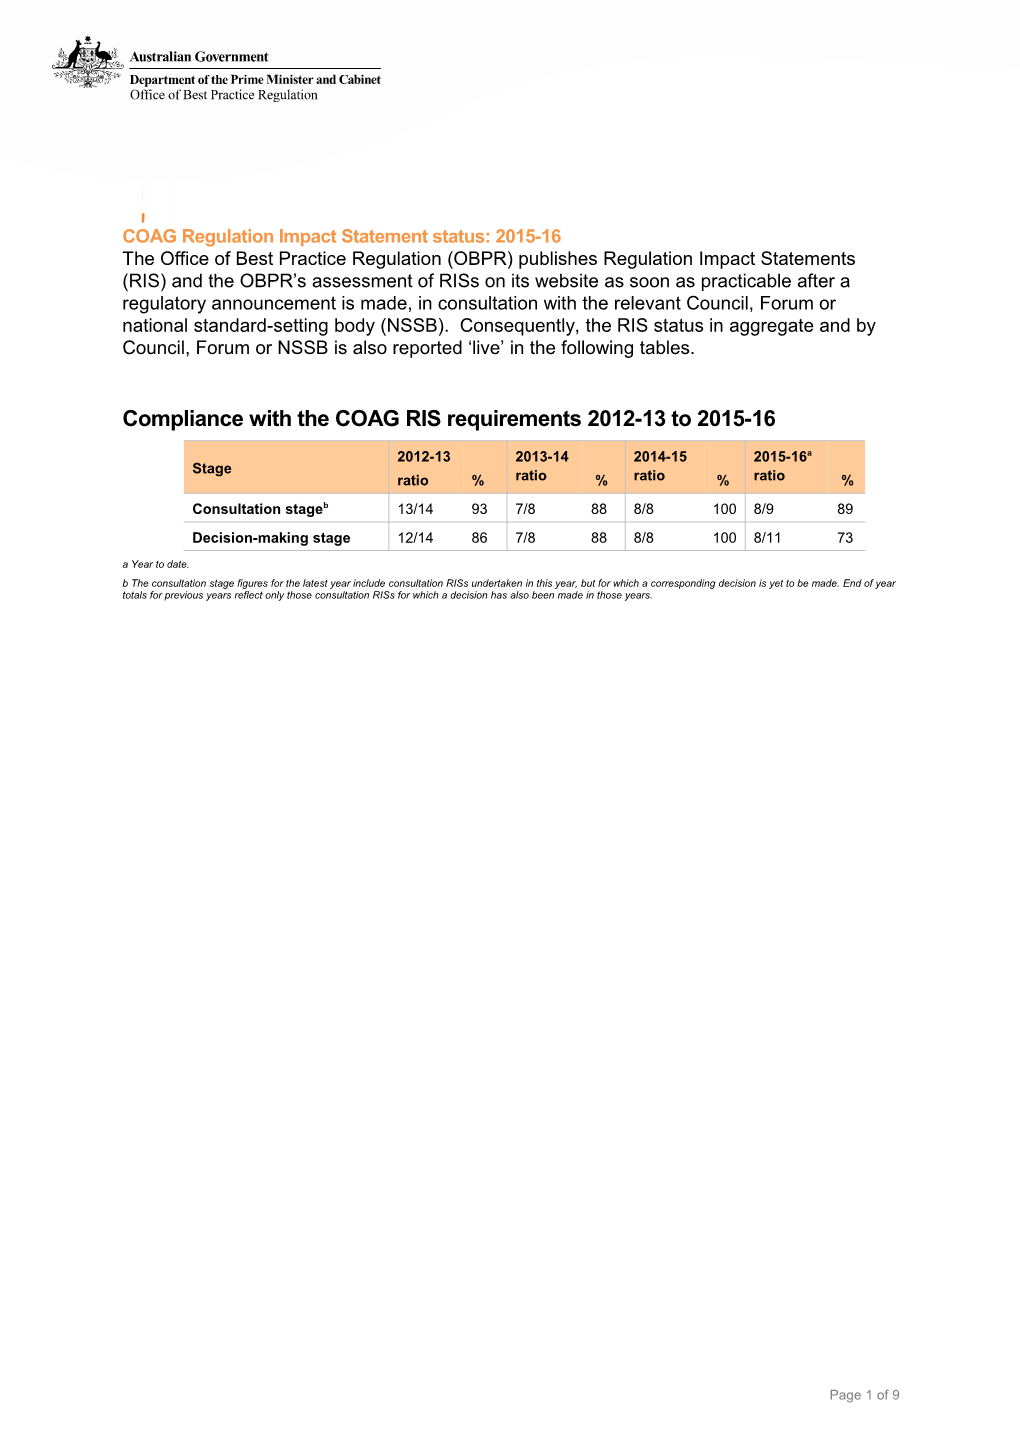 COAG Regulation Impact Statement Status - by Agency 2015-16